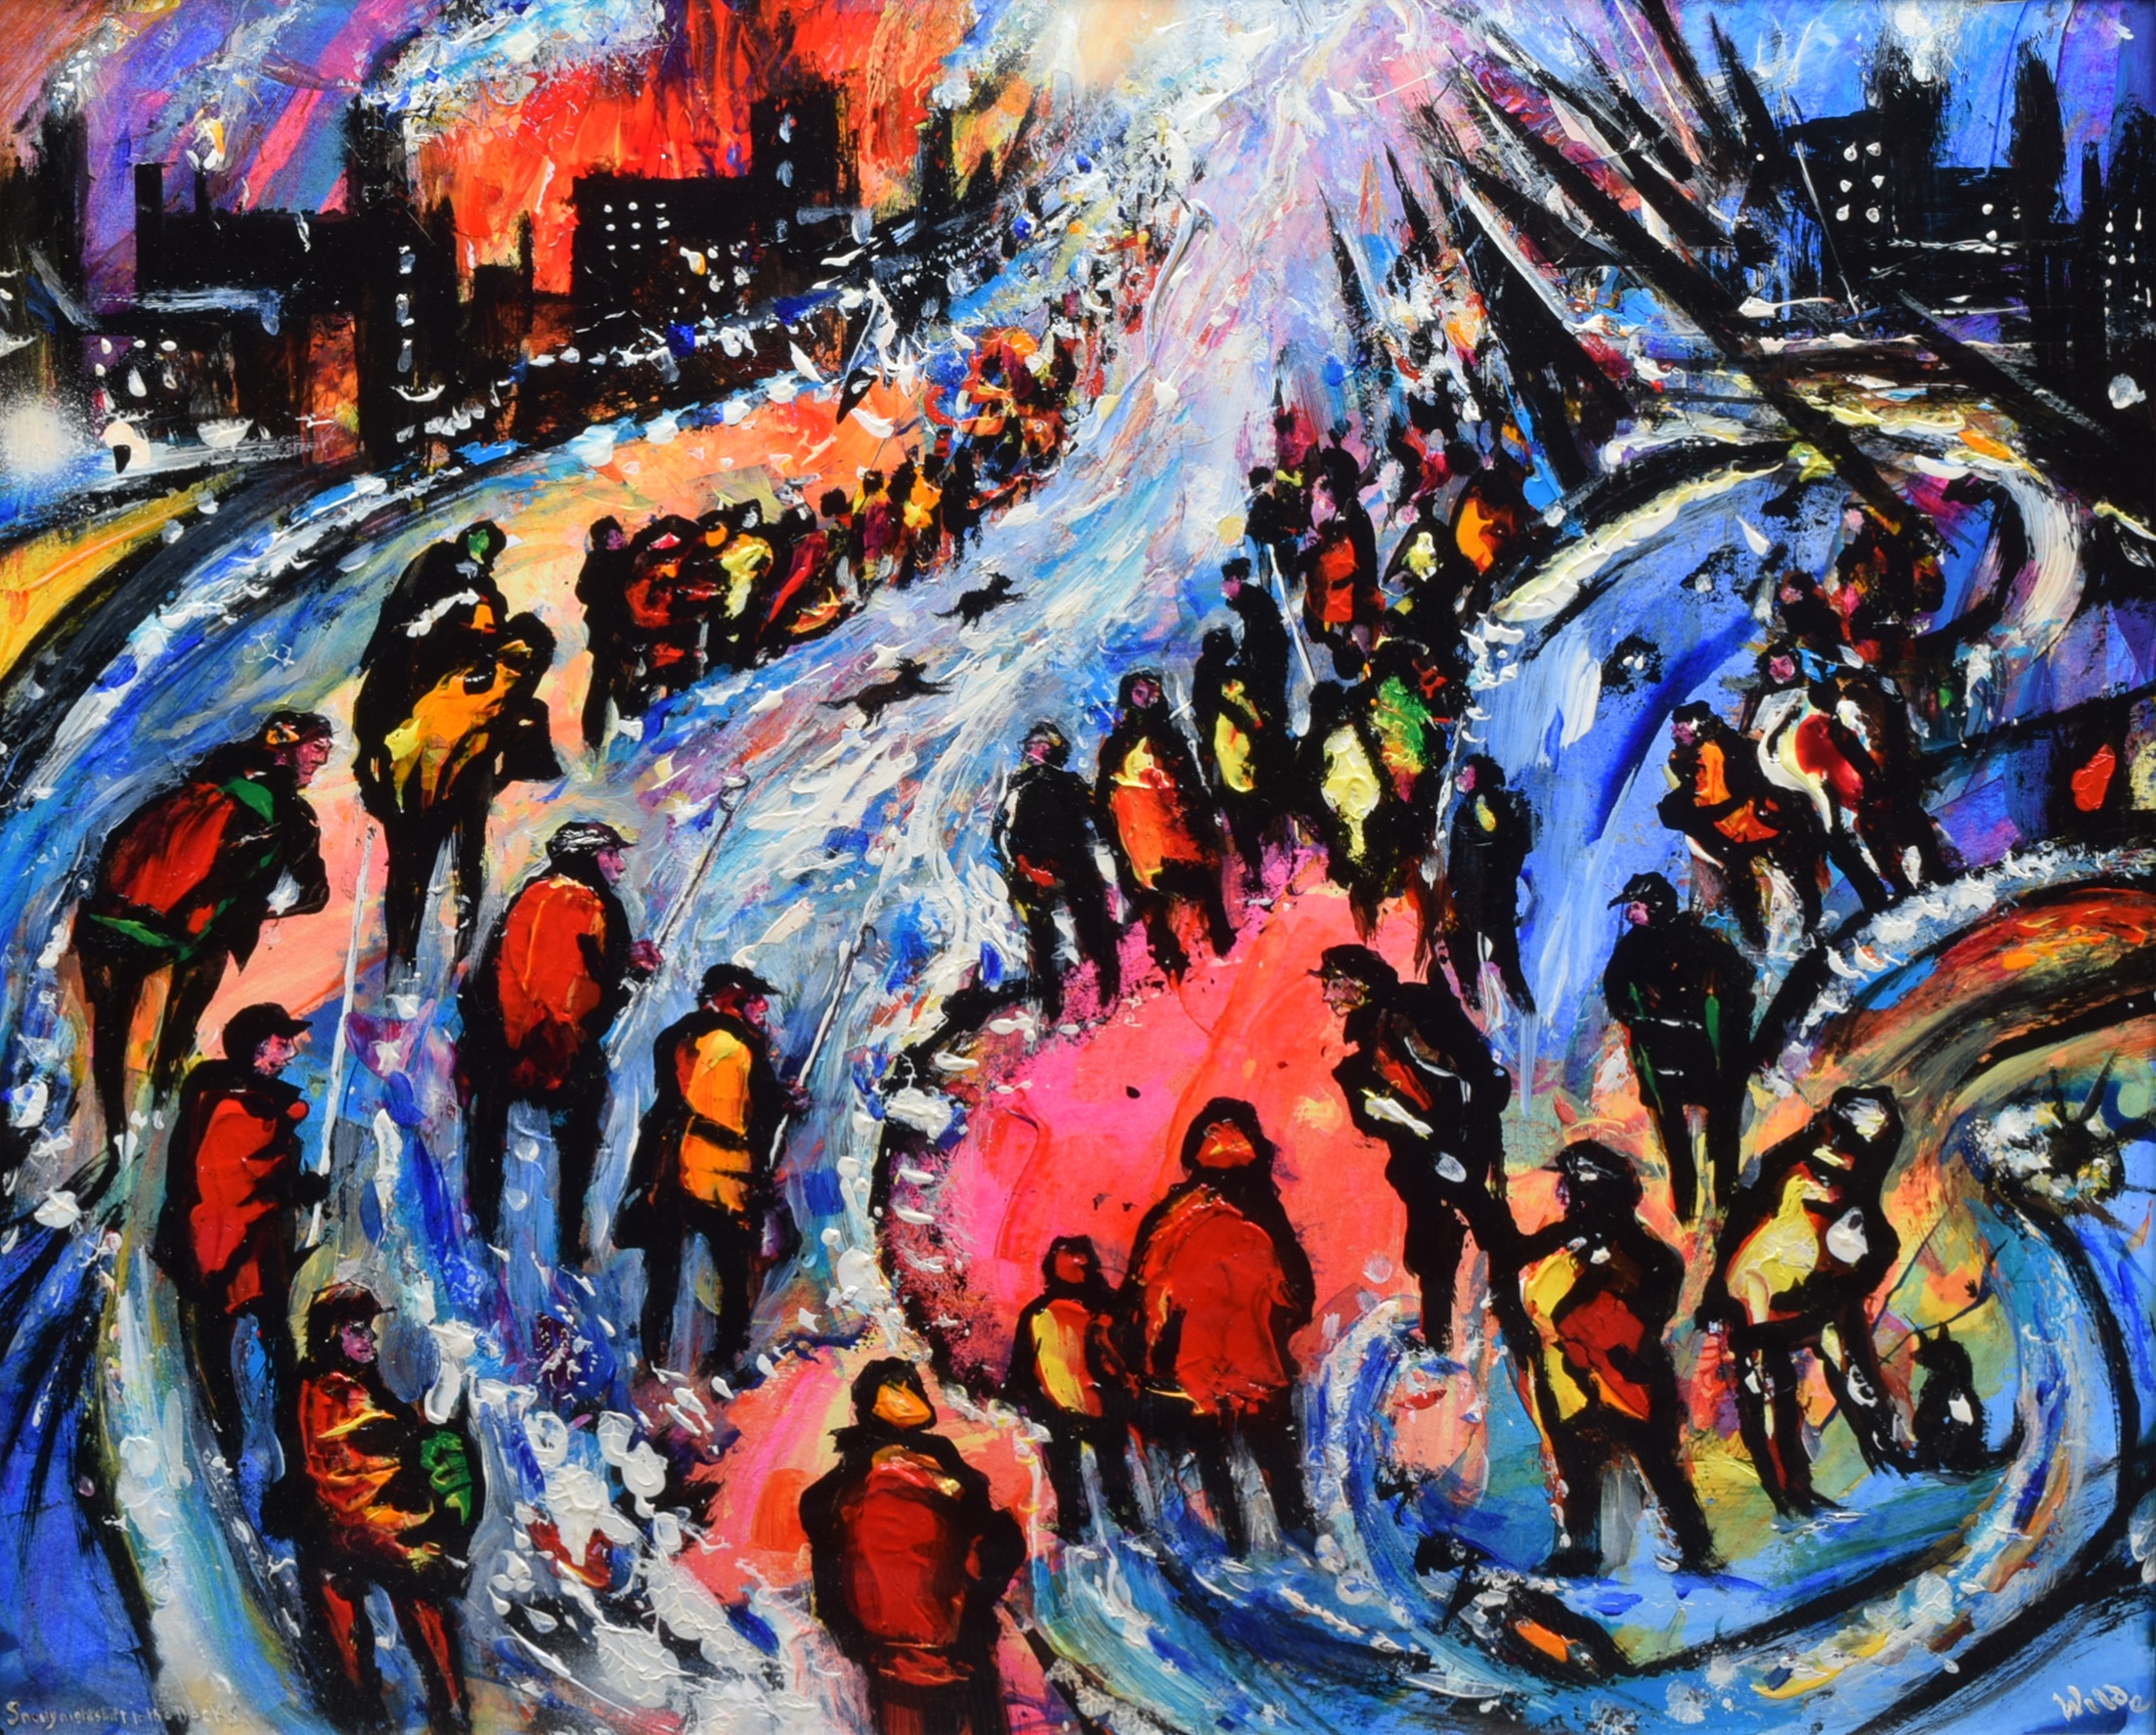 David Wilde, "Snowy Nightshift to the Docks", acrylic.